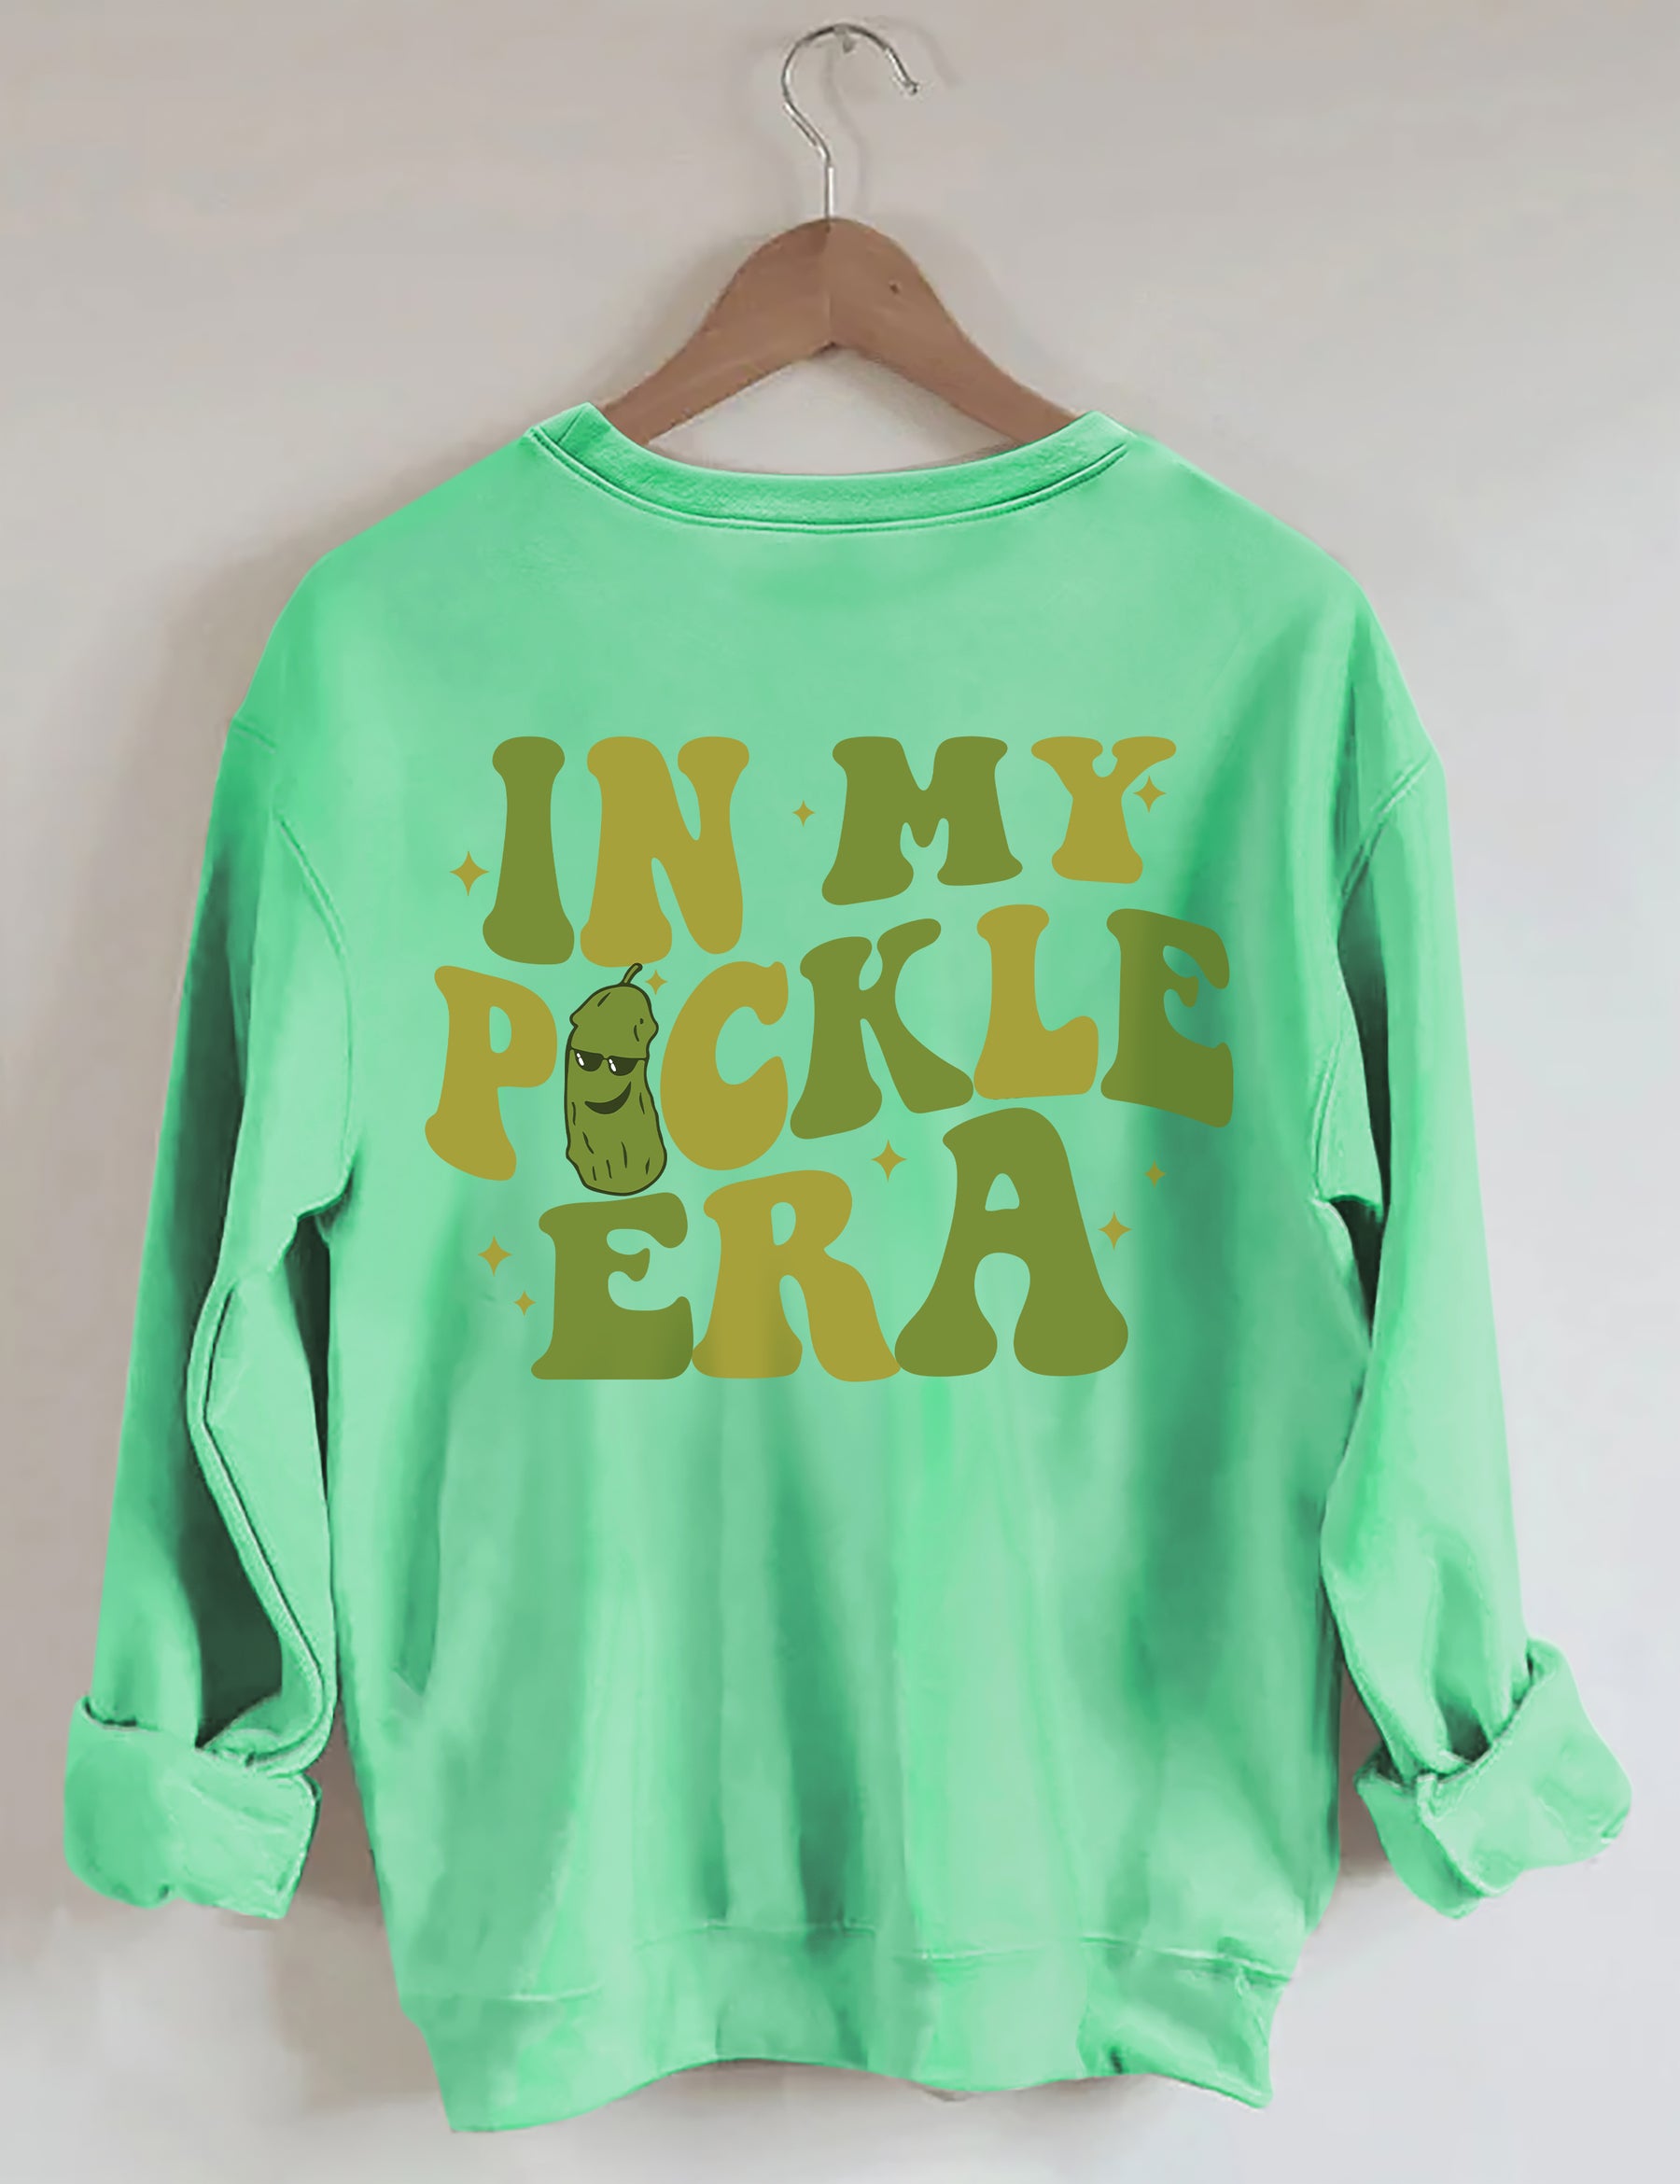 In My Pickle Era Sweatshirt